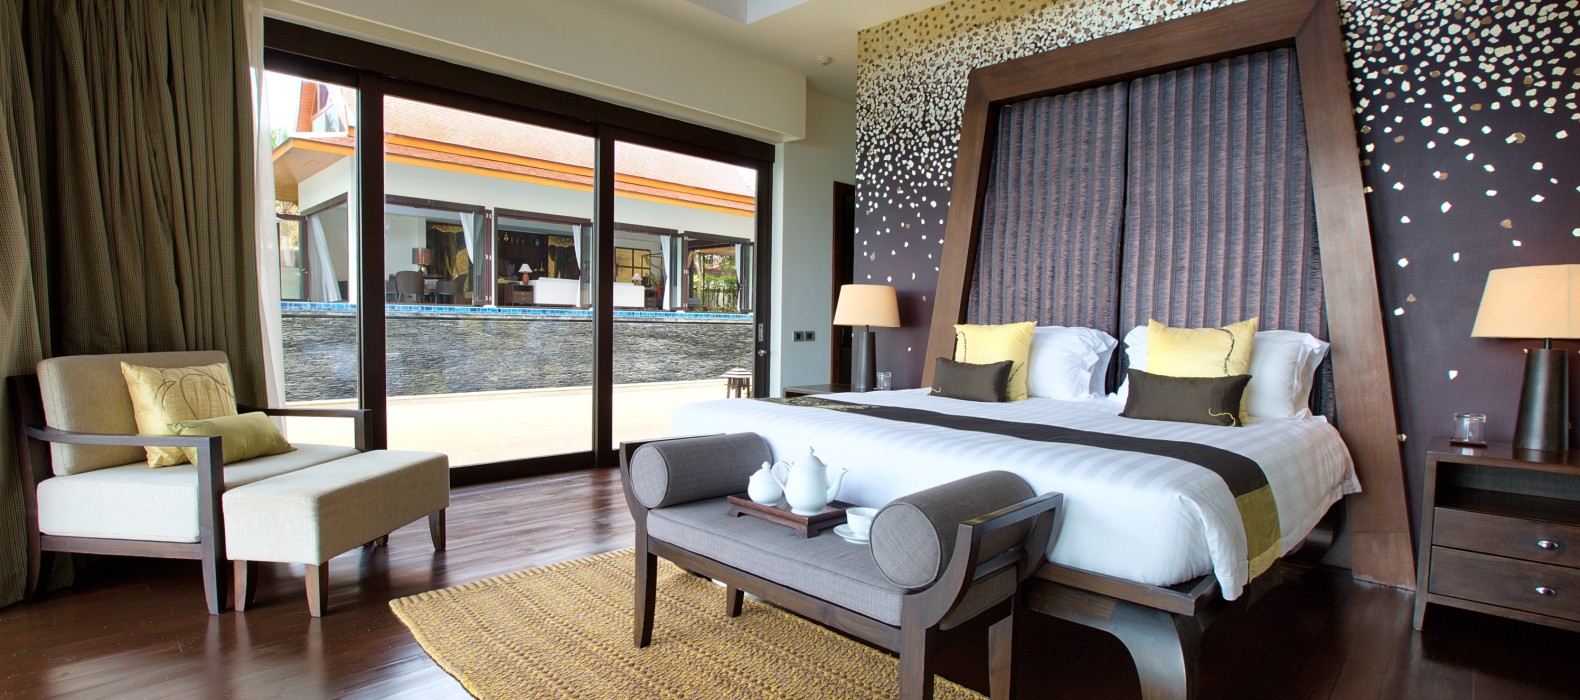 Bedroom view of Villa Secret Ocean in Koh Samui